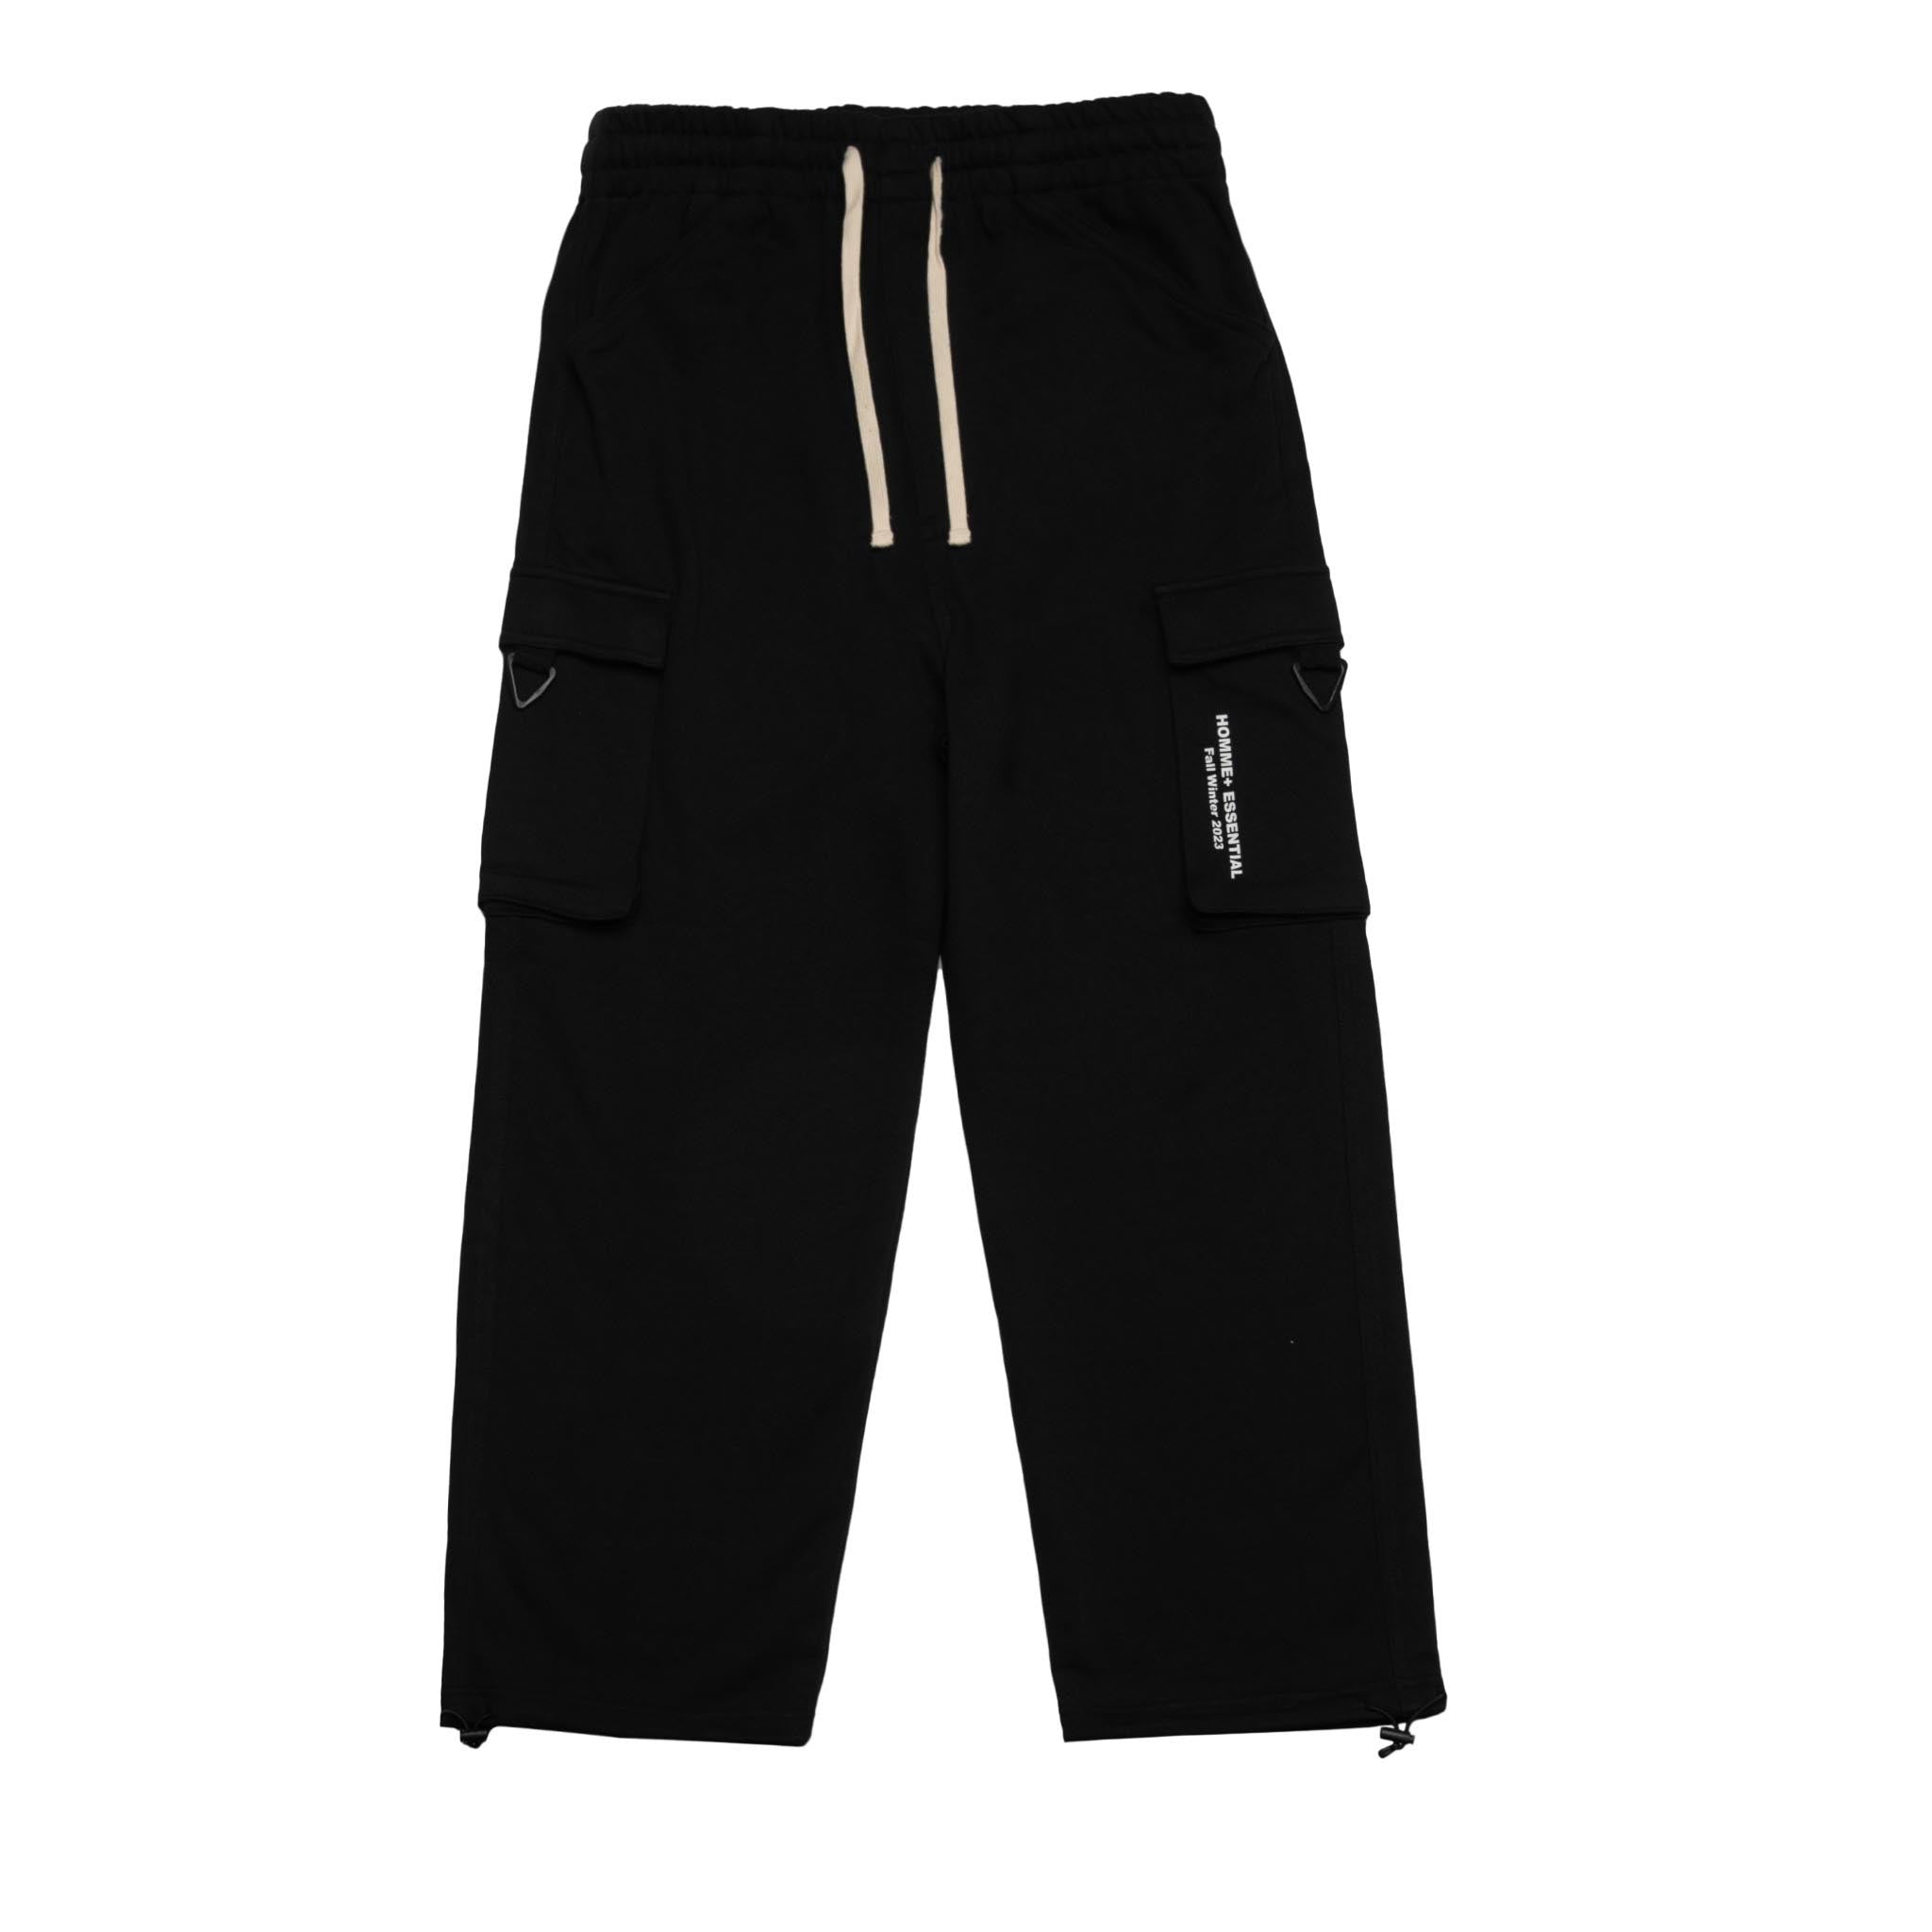 Men's Cargo Pants & Shorts, White & Black Pants